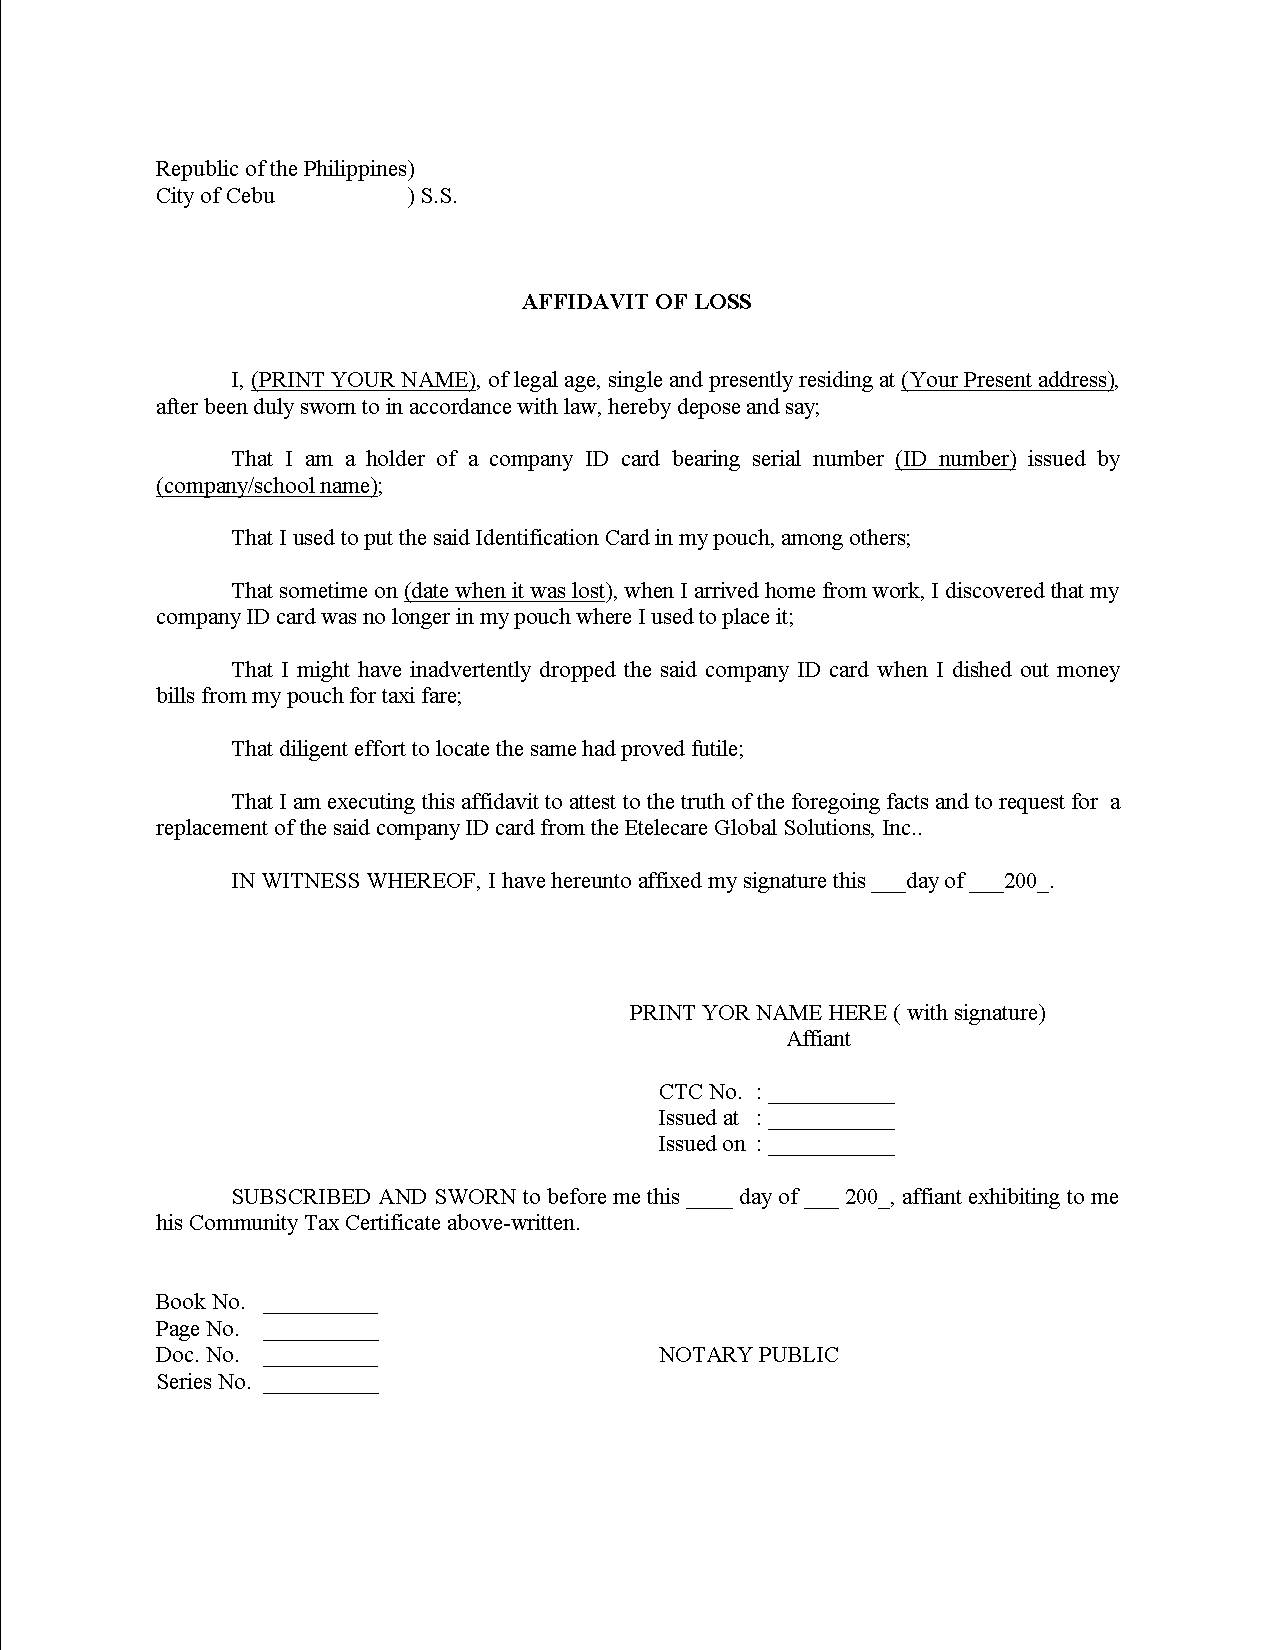 affidavit-examples-free-printable-documents